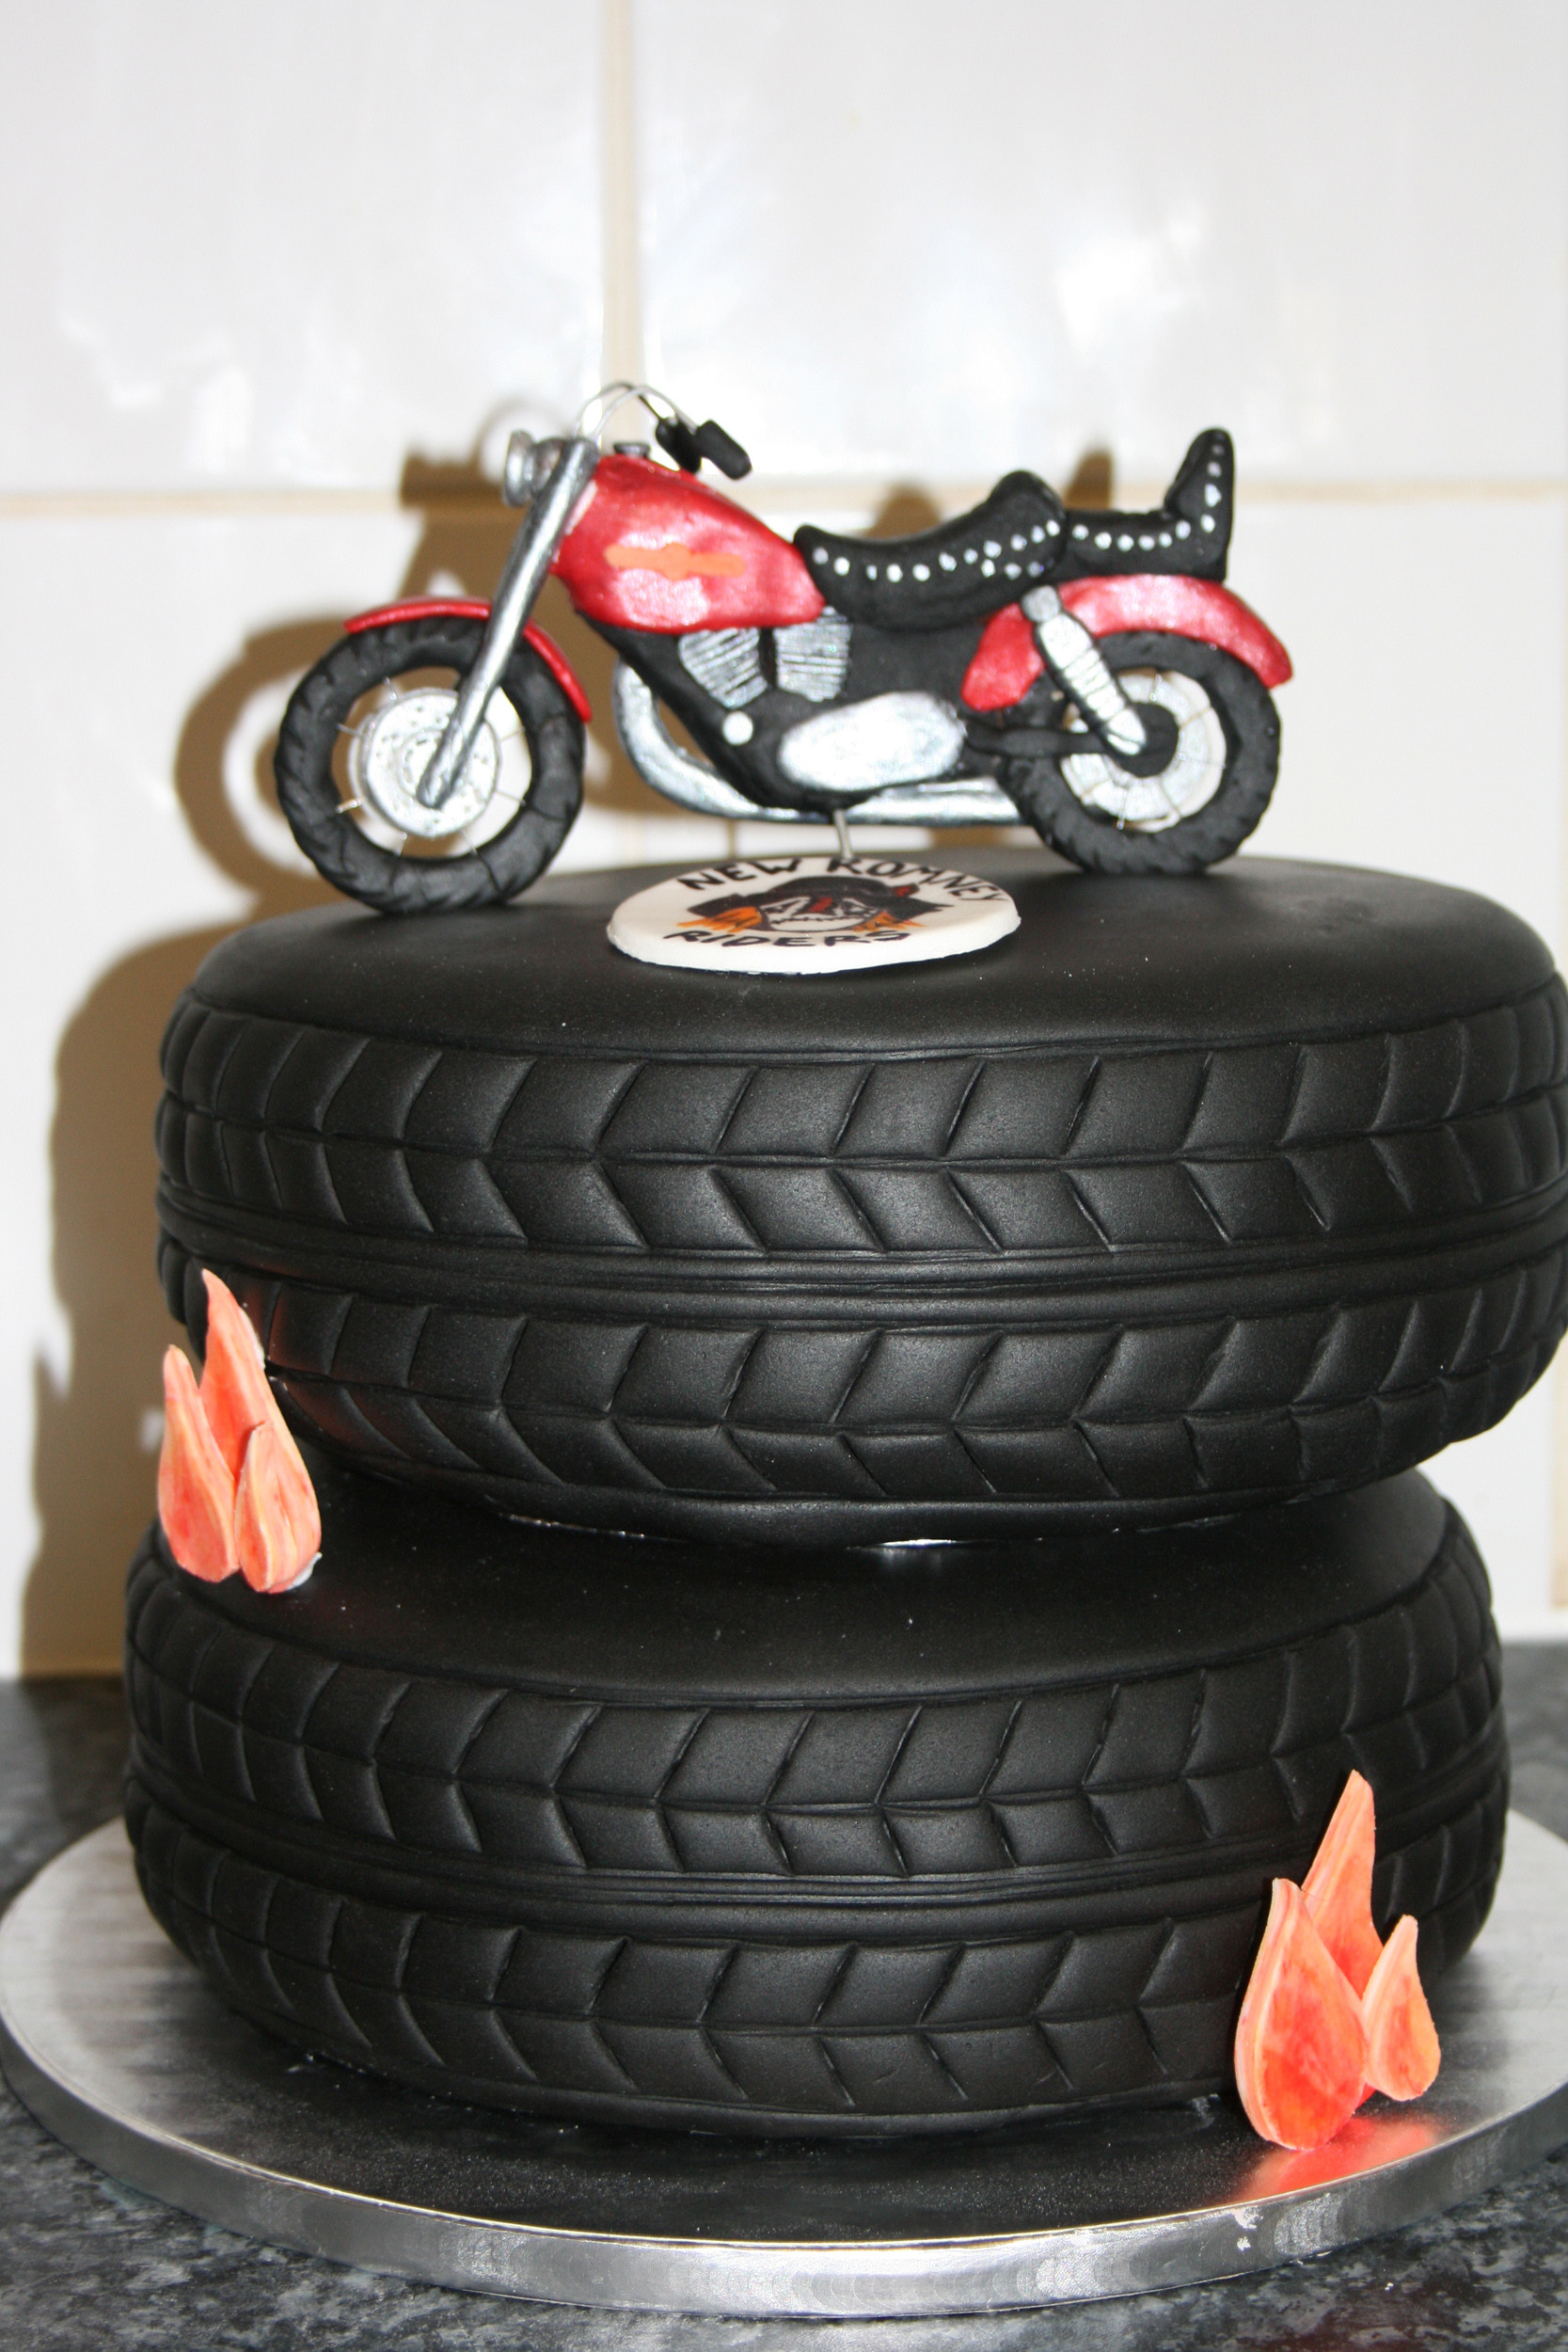 Harley Davidson Birthday Cake
 Harley Davidson cake